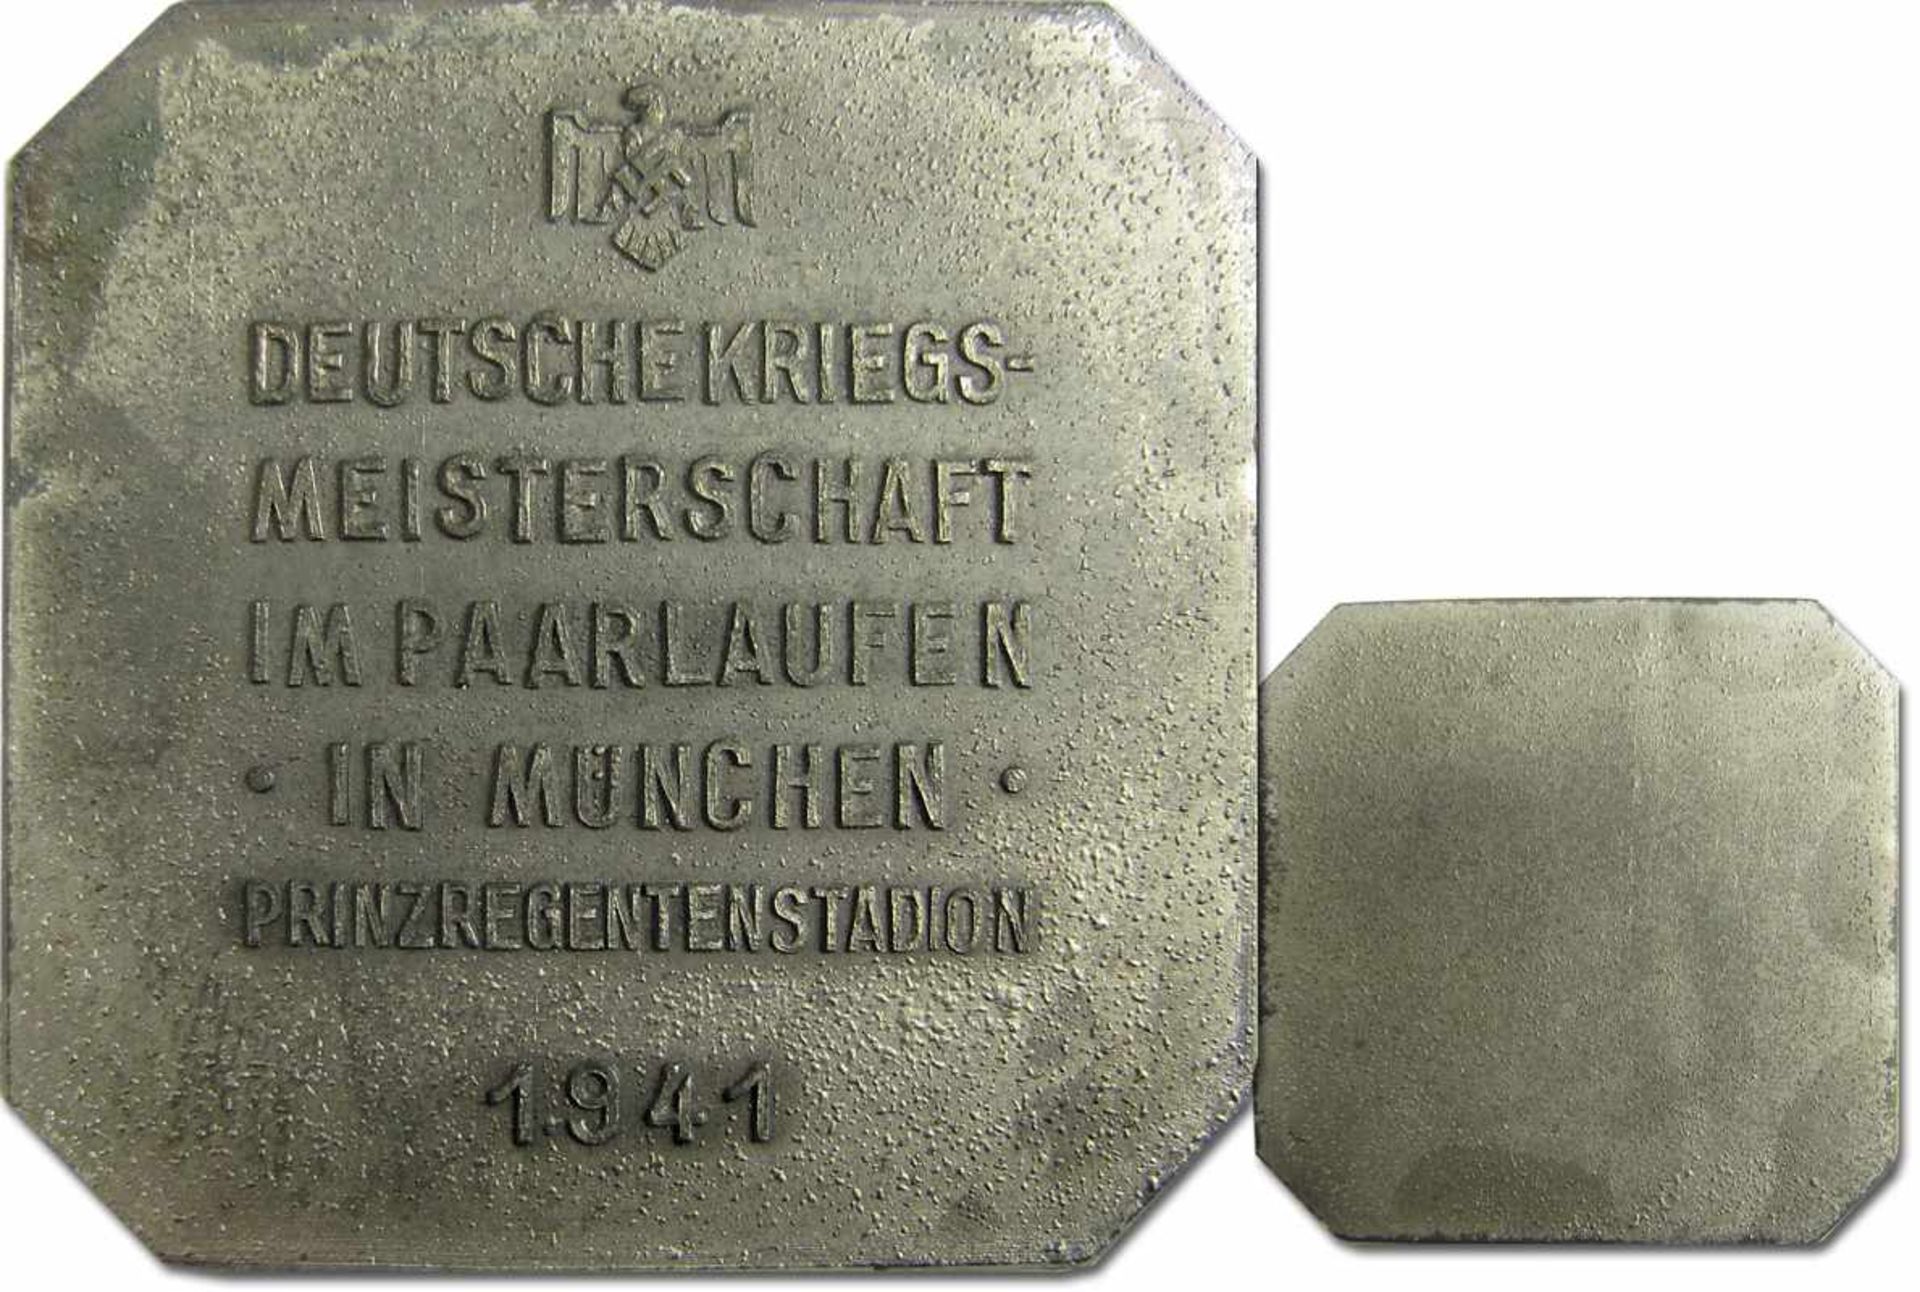 German Figure Skating championships 1941 Medal - Official participation badge "Deutsche